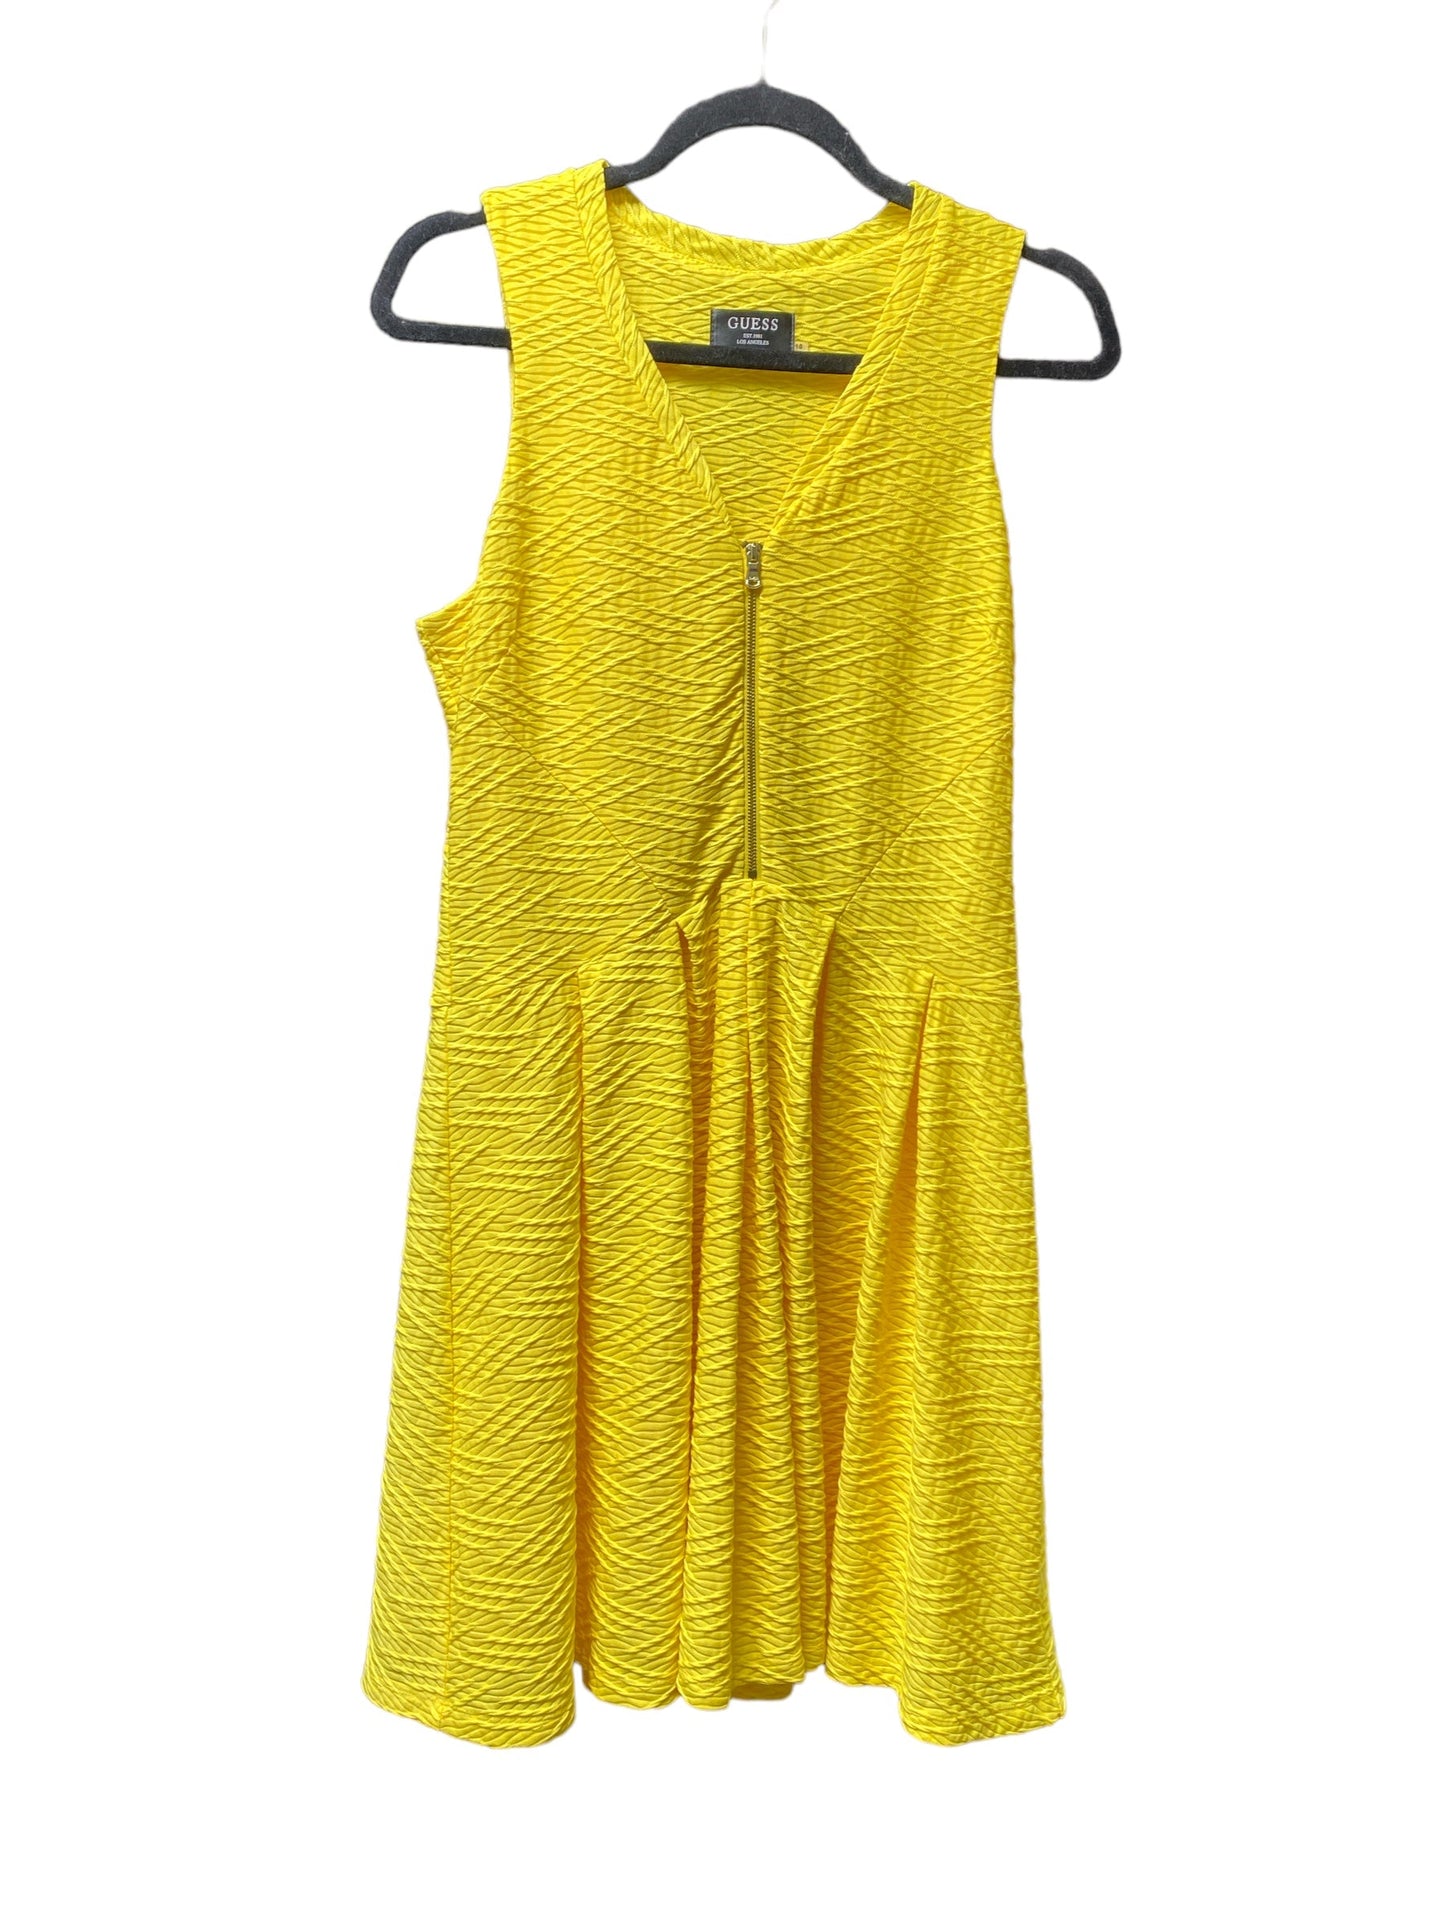 Yellow Dress Casual Short Guess, Size 10